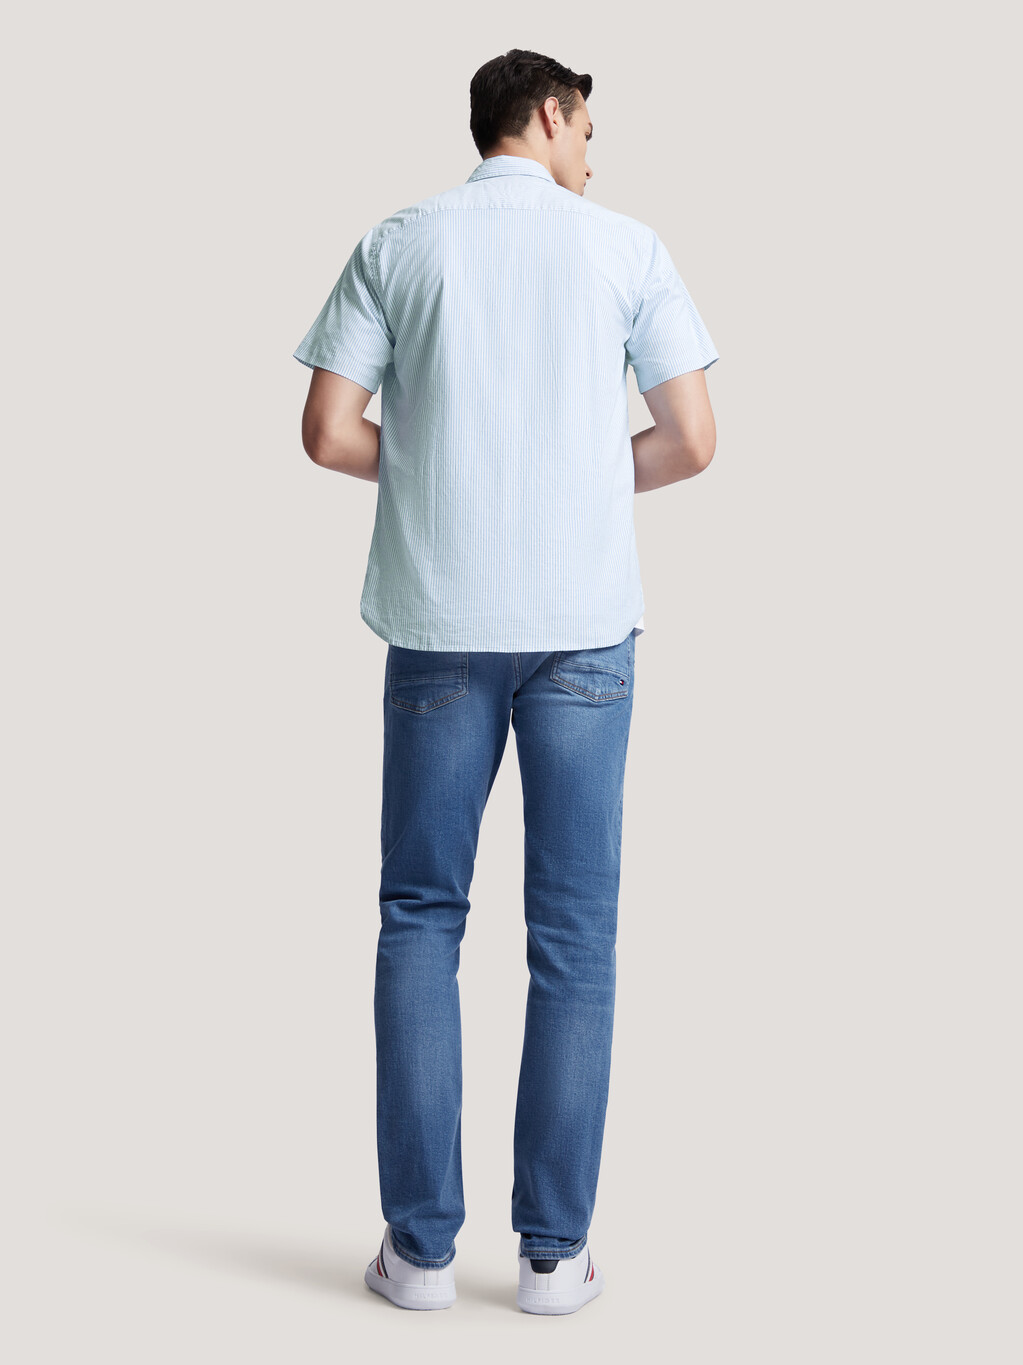 旗幟條紋短袖恤衫, Copenhagen Blue / White, hi-res